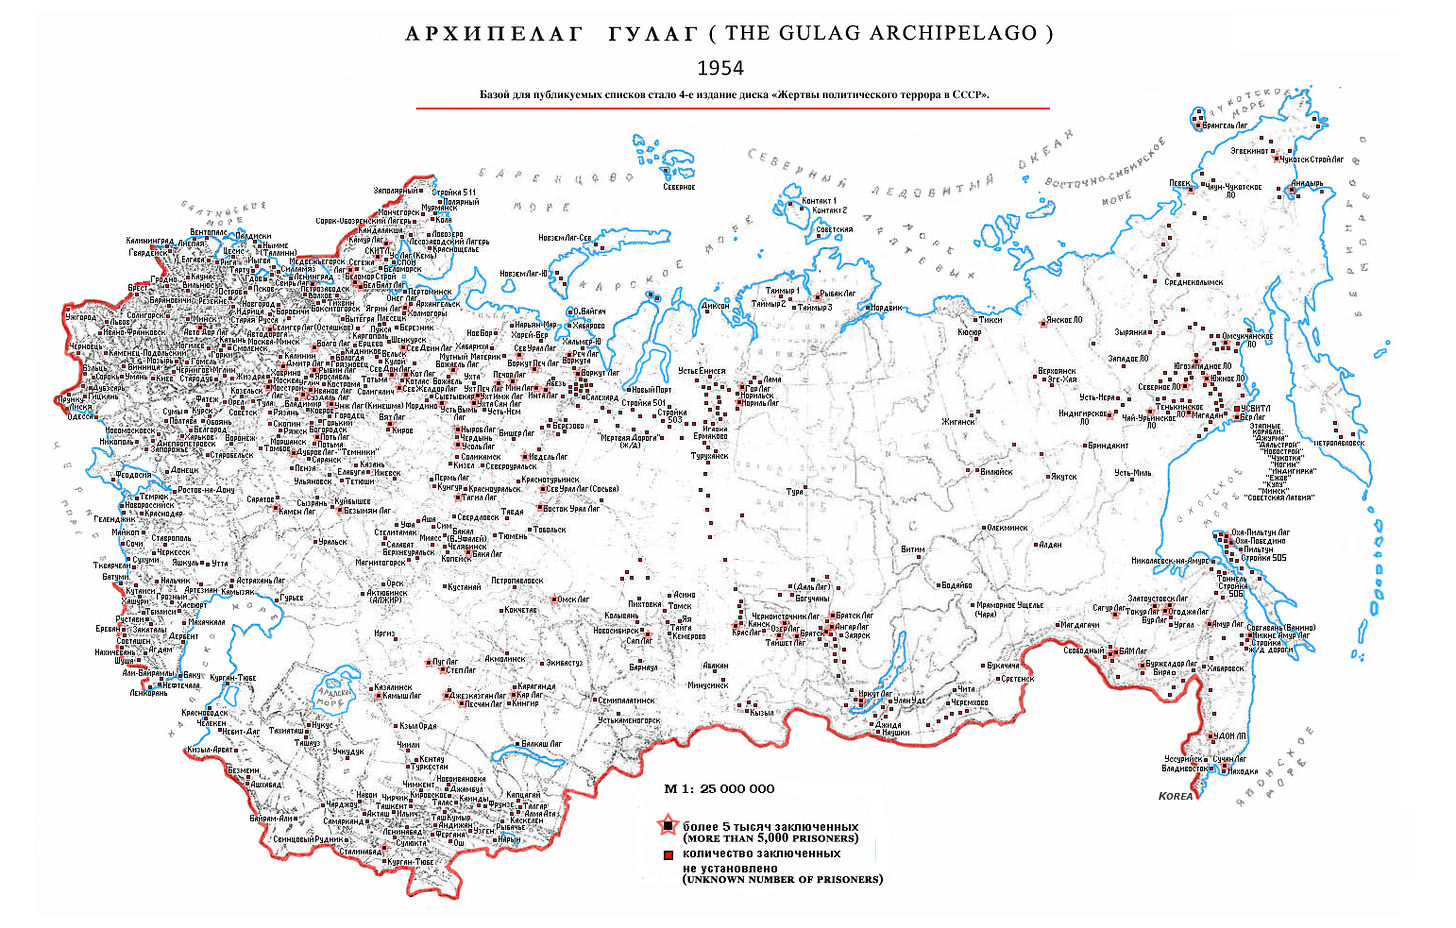 The Gulag Archipelago (The Soviet forced labor camp system) - Vivid Maps